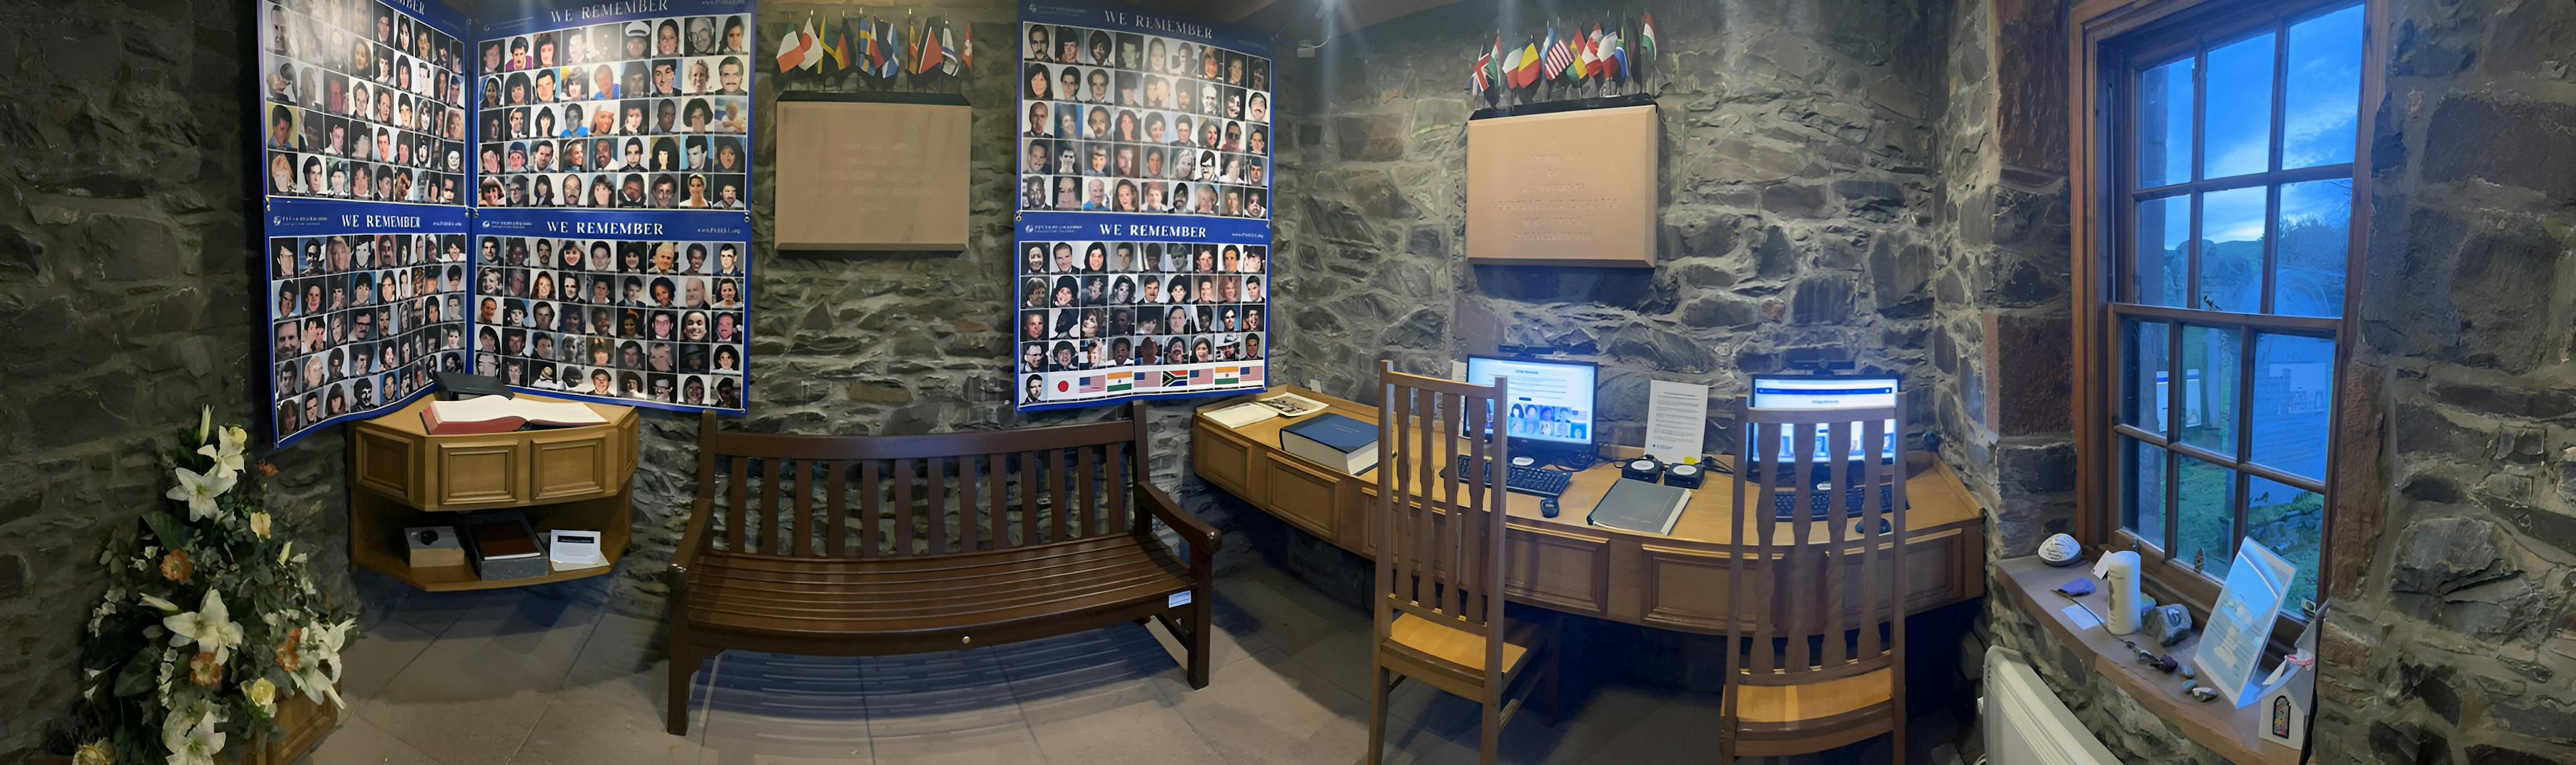 Terror Victims Photo Gallery Unveiled in Lockerbie